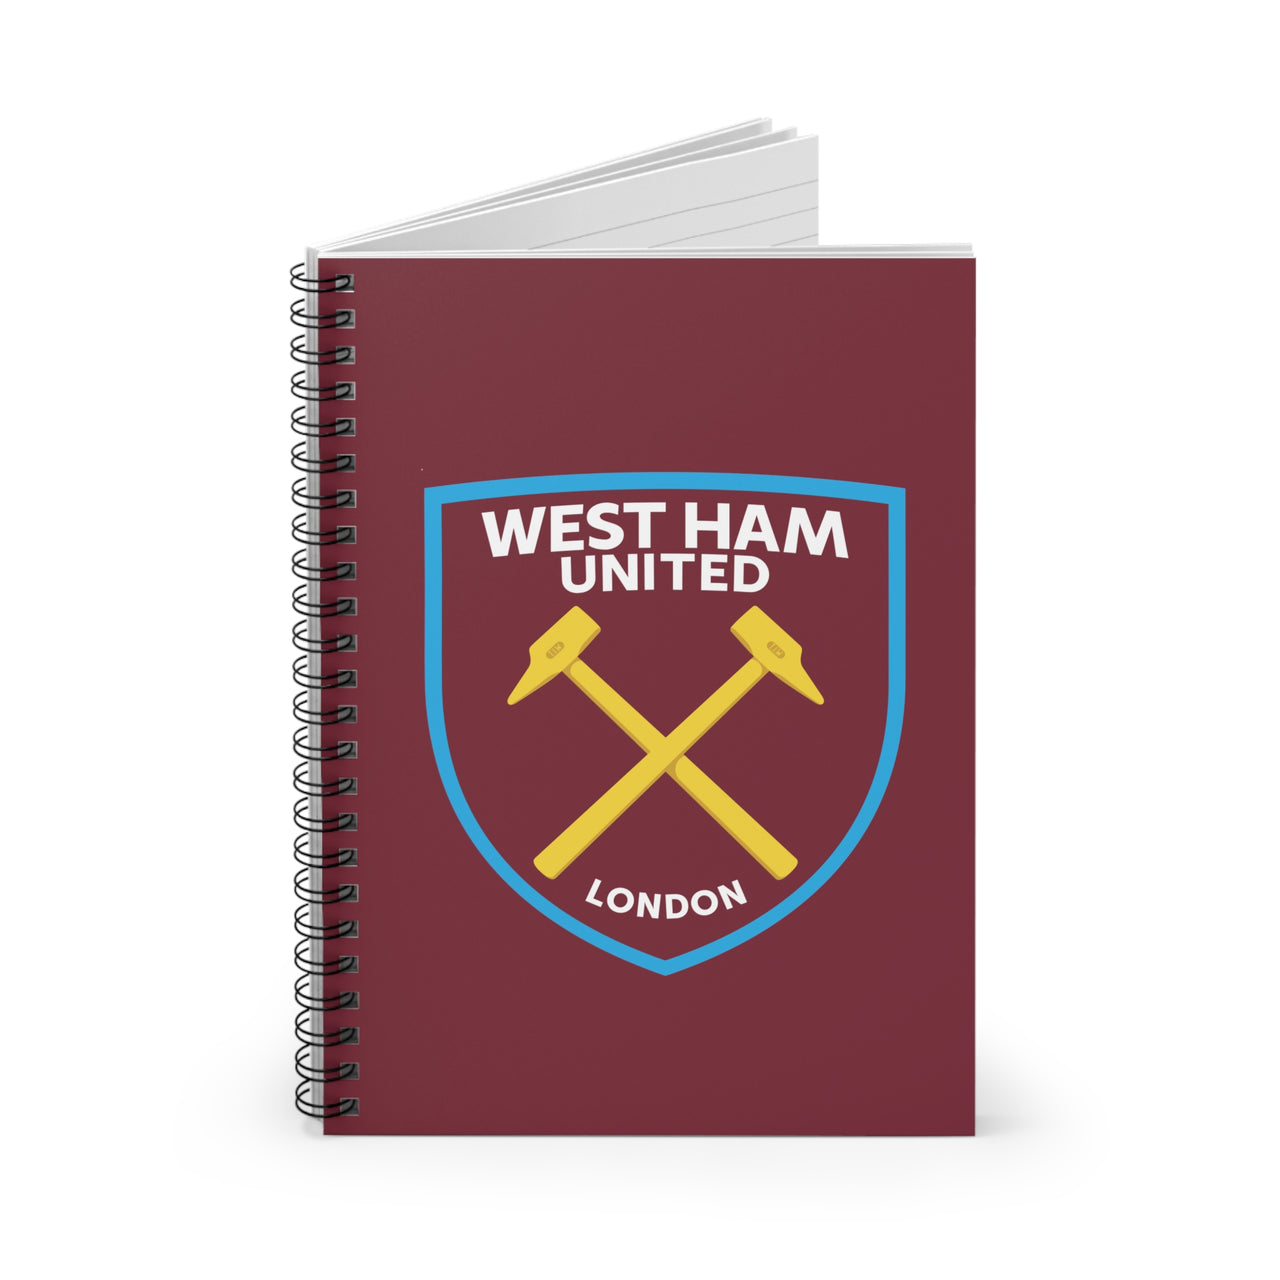 West Ham Spiral Notebook - Ruled Line